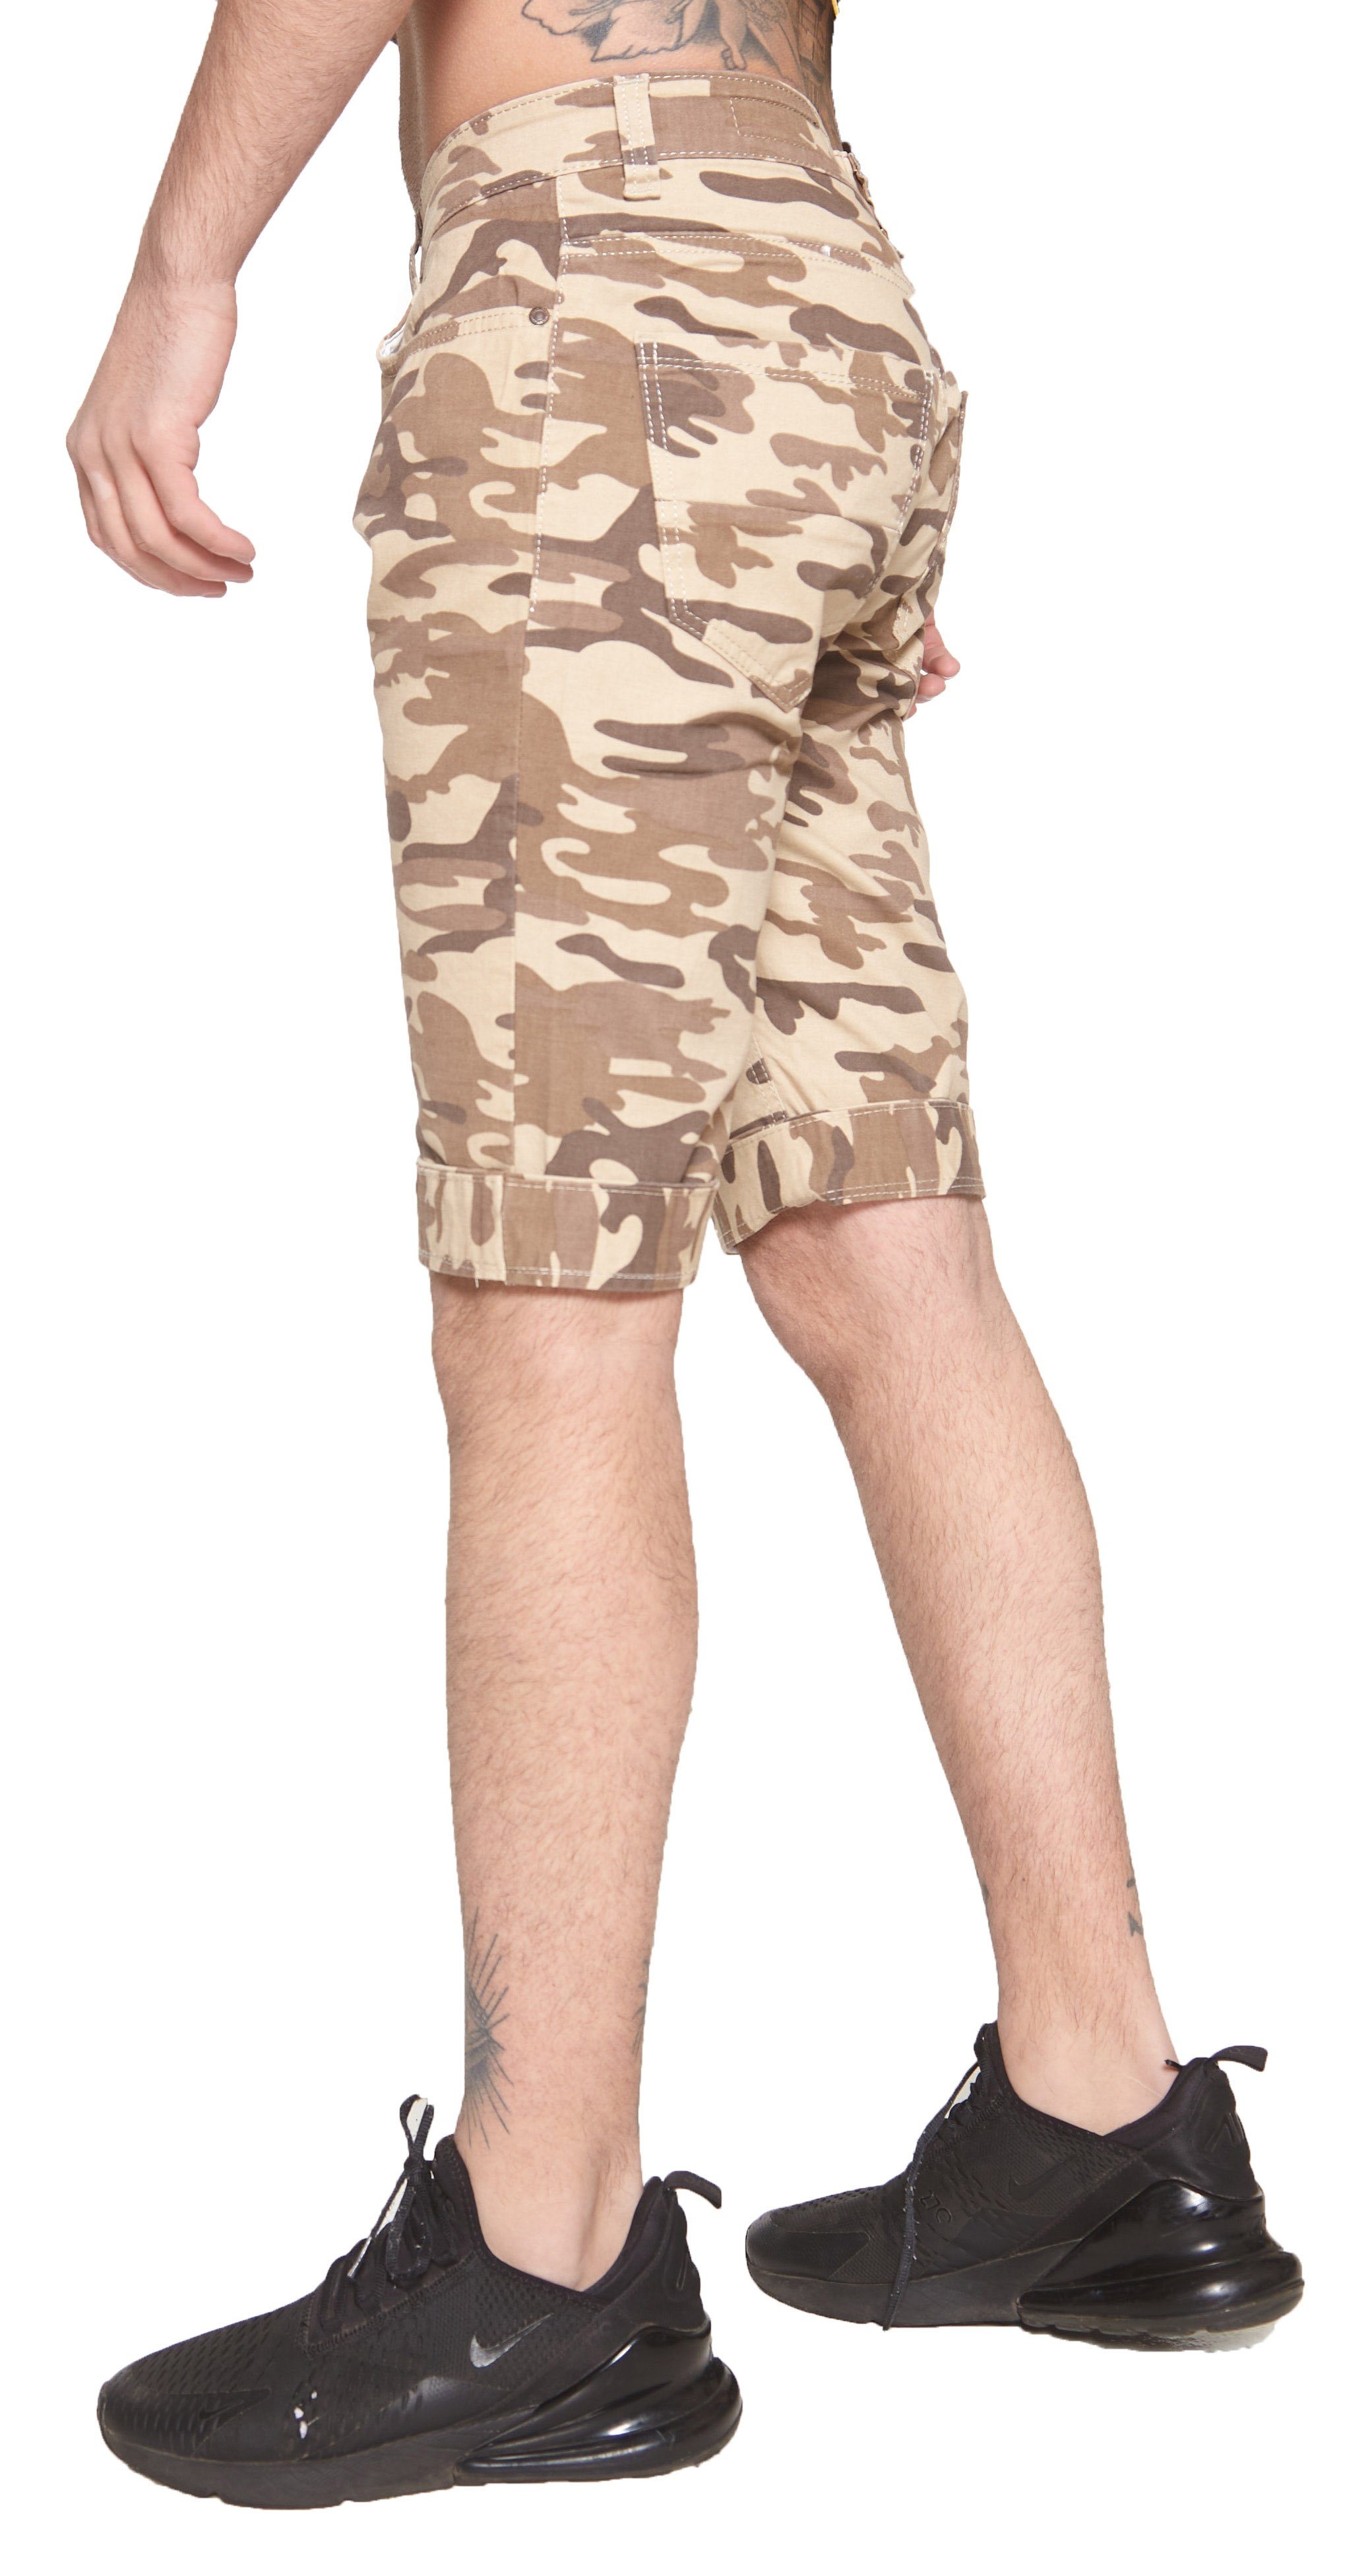 Shorts Bermudas Mixed Kayna 1-tlg., Sweatpants, Color Kurze Camouflage Männer Jeans Hose Freizeit John im Design) modischem Herren Hose Casual Fitness (Kurze Bermudas